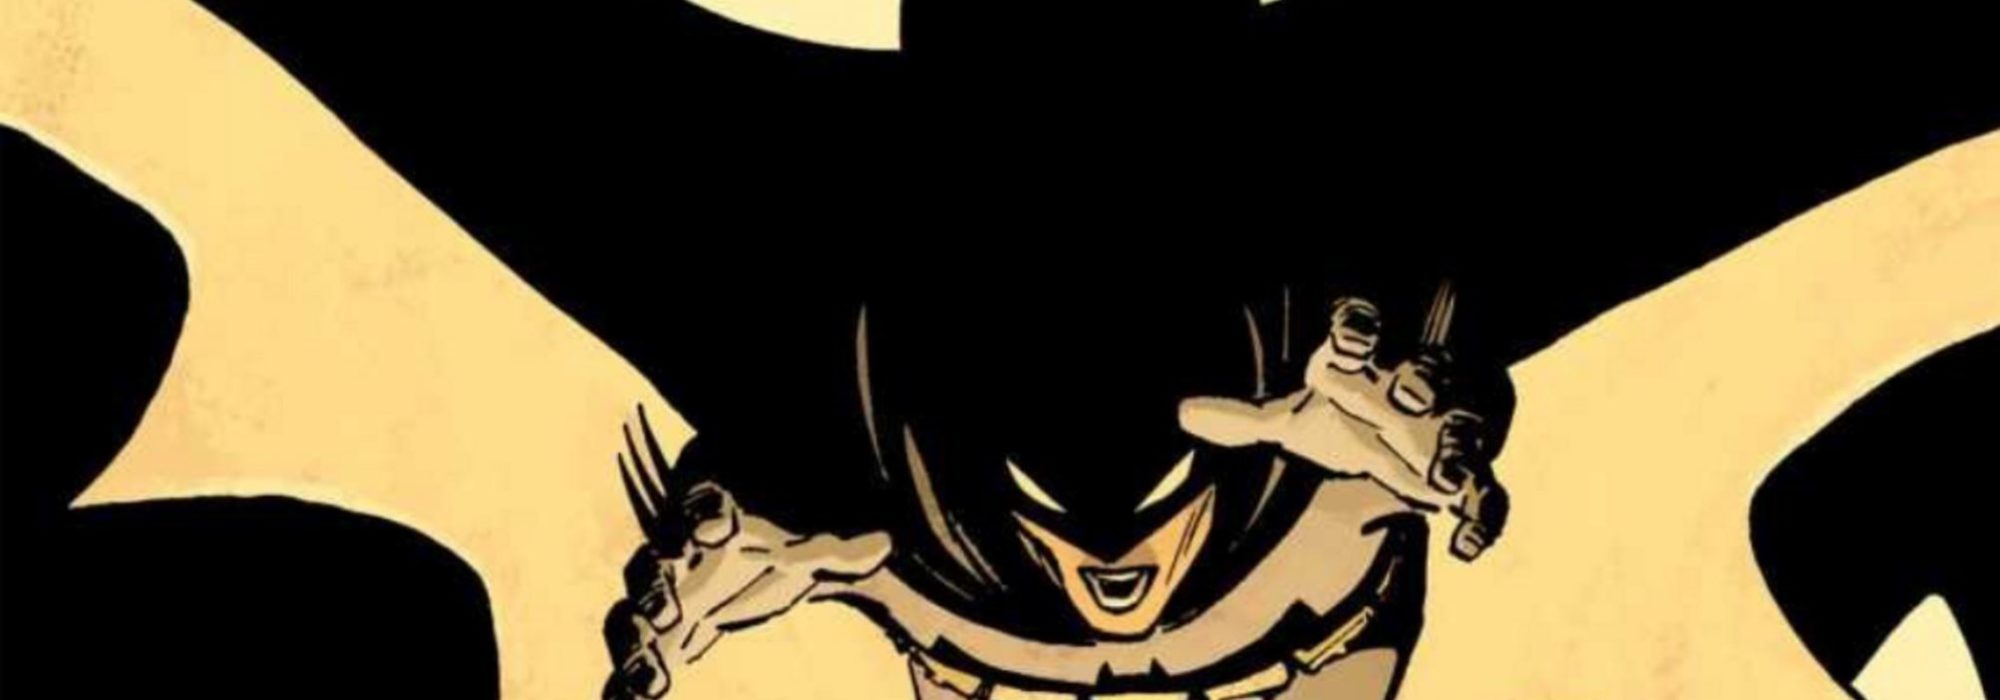 Imagem: detalhe da capa de Batman Year One (1988)